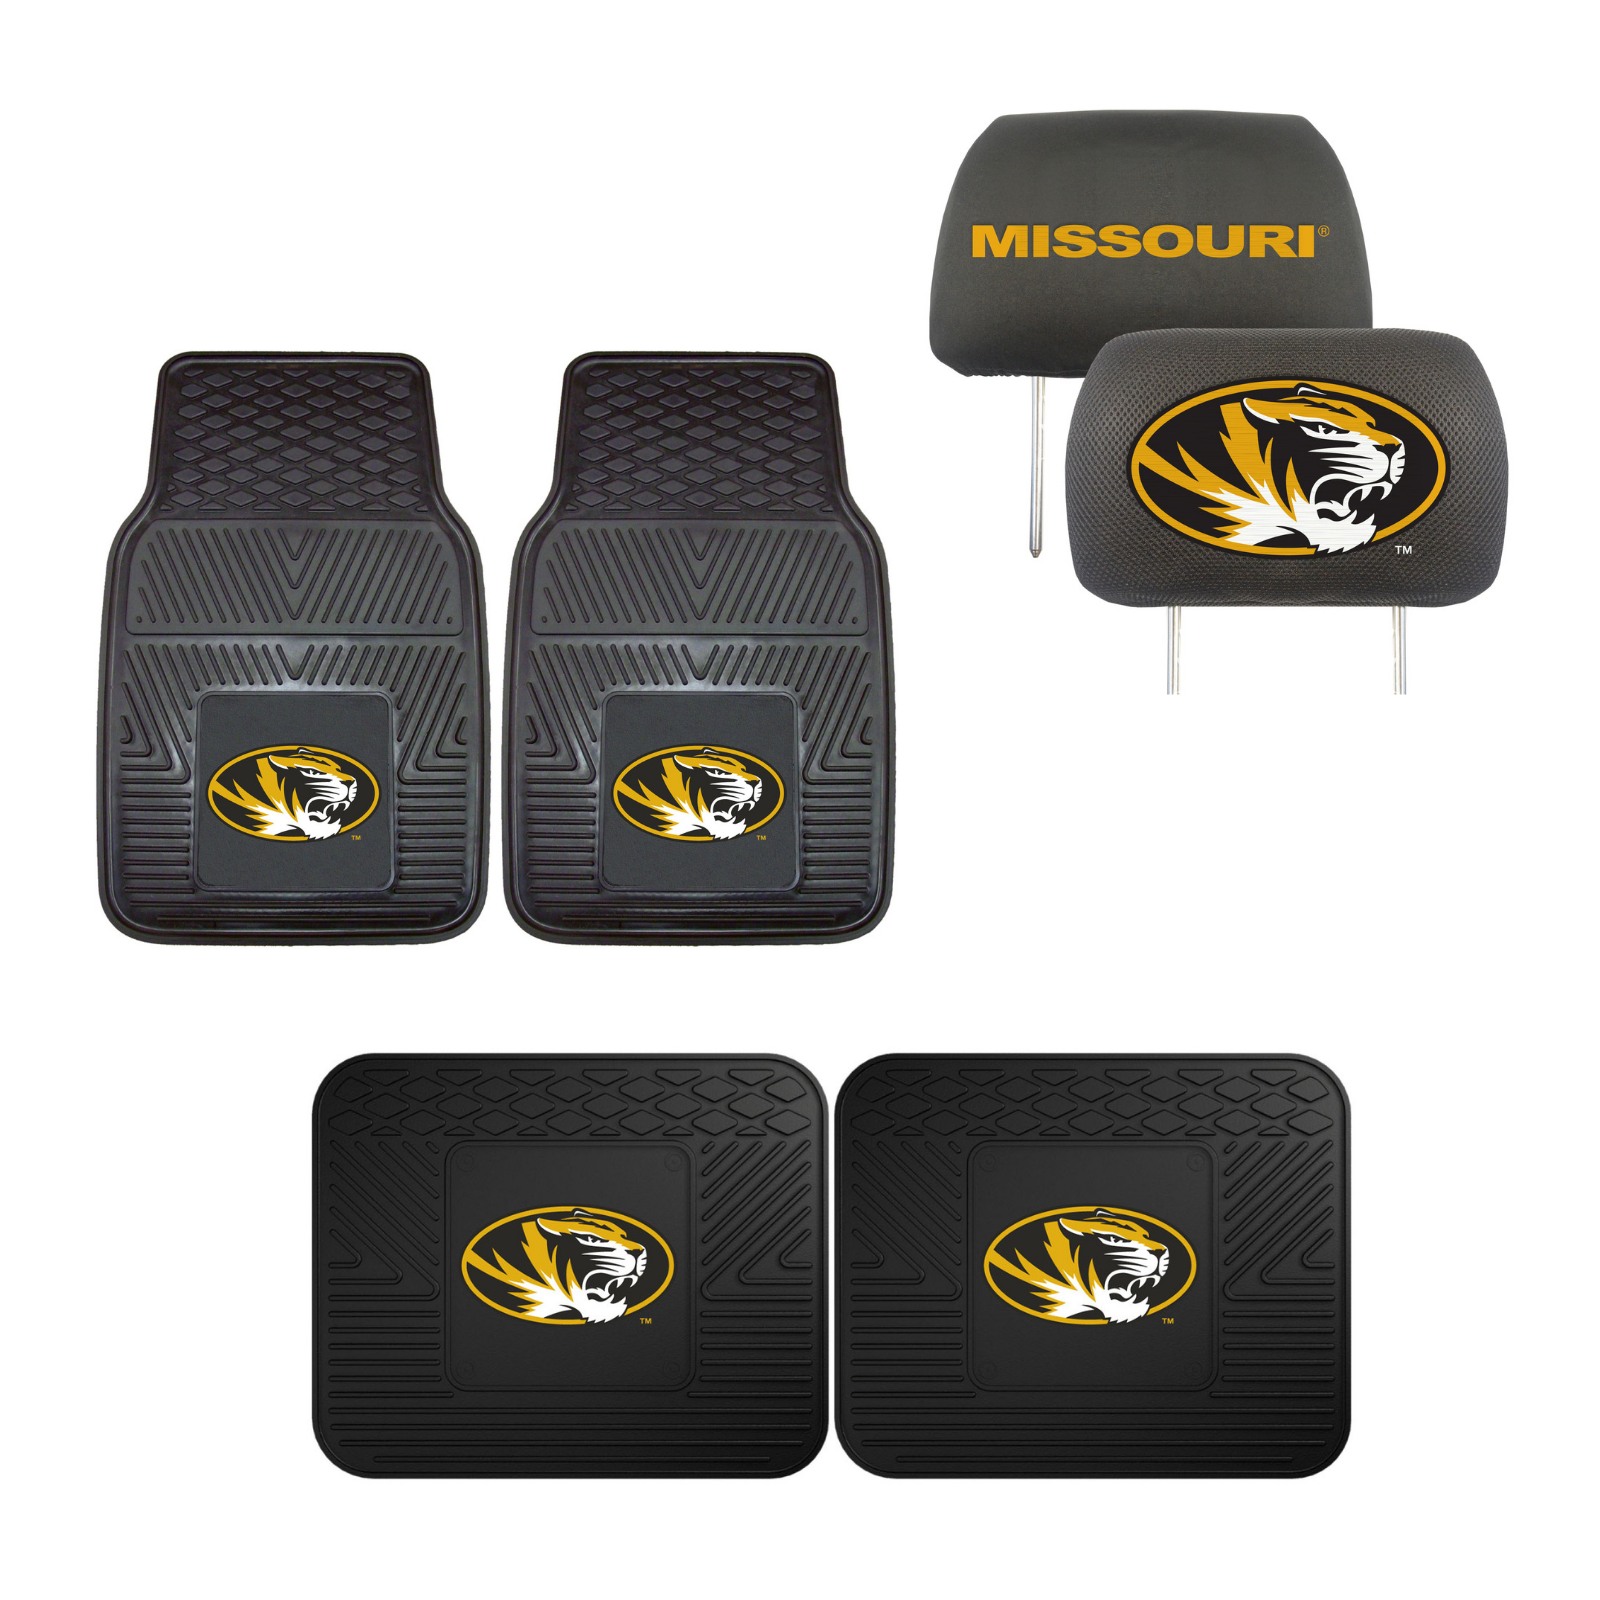 University of Missouri Tigers  4pc Car Mats,Headrest Covers & Car Accessories